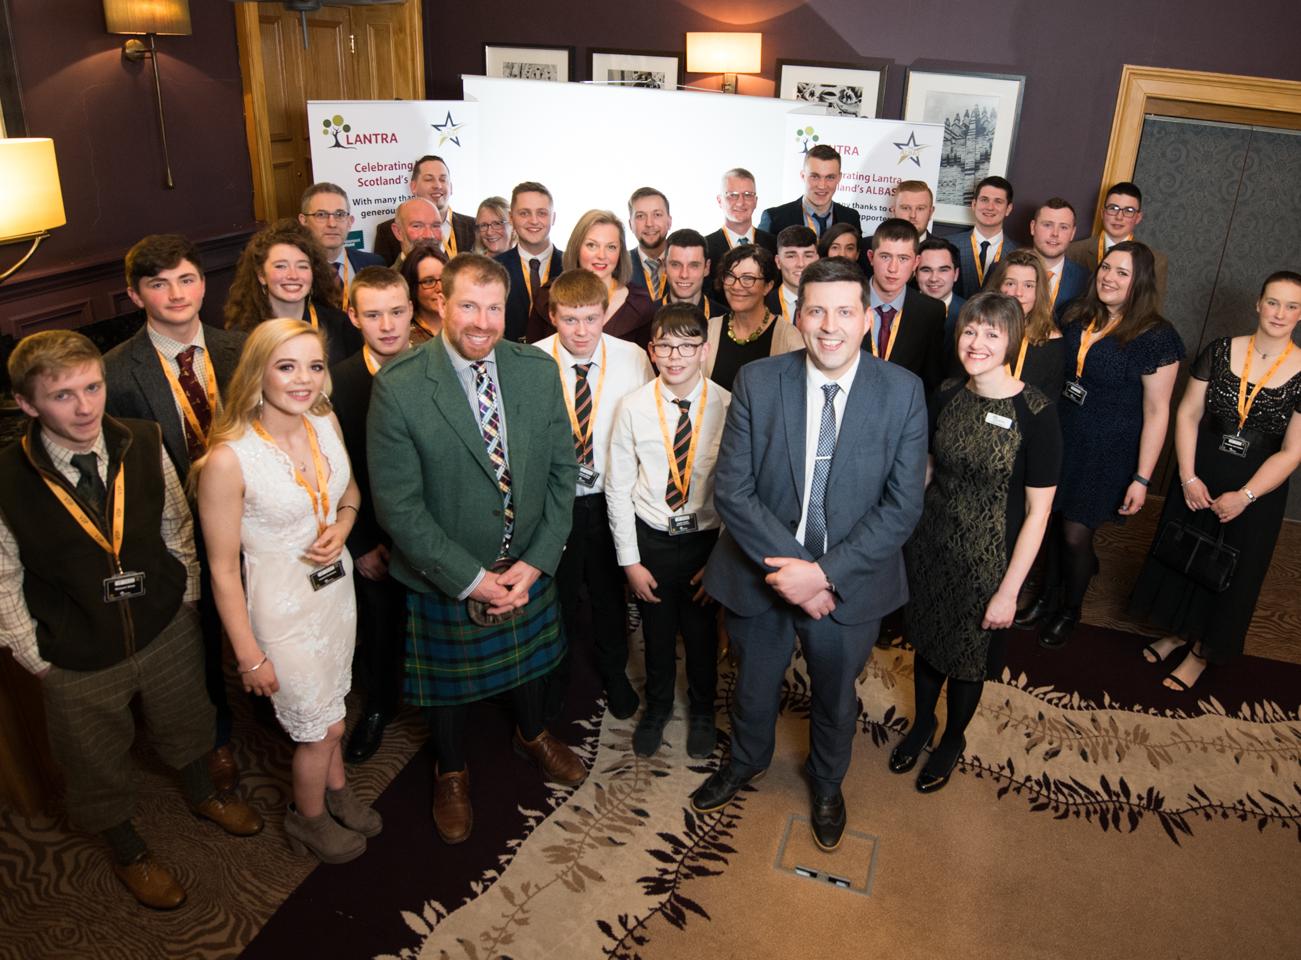 Lanrta Scotland's ALBAS finalists with Minister Jamie Hepburn MSP